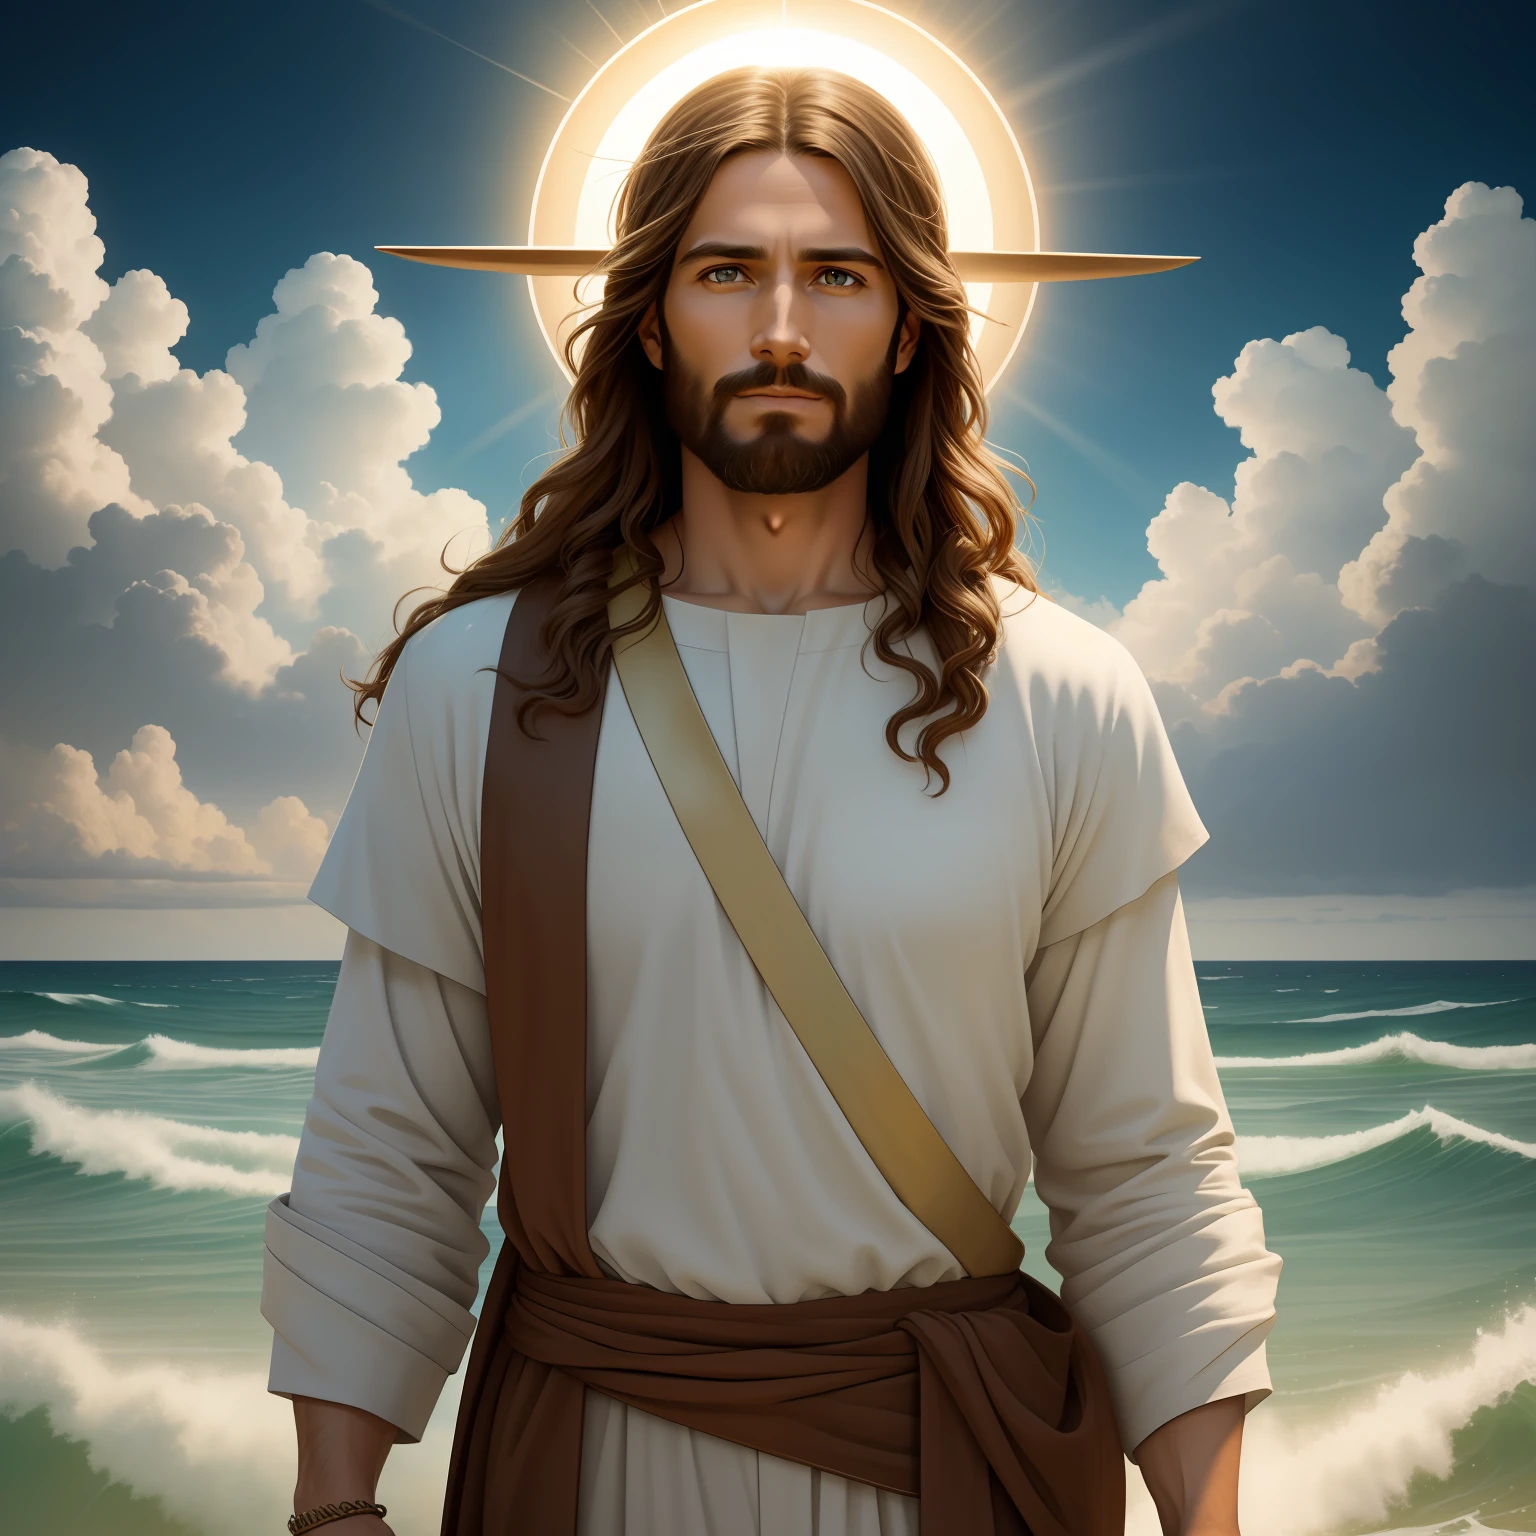 A beautiful ultra-thin 實際的 portrait of Jesus, 先知, 一名男子 35 歲 希伯來文 黑髮, 棕色短发, 真正完美的眼睛, 長長的棕色鬍子, 和, 幫助人們 , 穿著胸部封閉的長亞麻外衣, 在前視圖中, 全身, 聖經的, 實際的,迭戈·委拉斯開茲,彼得·保羅·魯本斯,林布蘭,亞歷克斯·羅斯,8K, 概念藝術, Photo實際的, 實際的,  插圖, 油畫, 超現實主義, Hyper實際的, 幫助人們 , 數位藝術, 風格, watercolorReal Jesus flying on sky 和 a flying cloud in the background, 耶穌在水上行走, 聖經的 illustration, epic 聖經的 representation, 迫使他逃離, 從海洋出來, ! 握在手上!, 下船, 海洋之神, 美麗的表現, 8K 3D Model, 實際的,
a 3D 實際的 of 耶穌 和 a halo in the sky, 耶穌 christ, 在天堂微笑, portrait of 耶穌 christ, 耶穌 face, 第35章 少年全能神, 天上神的肖像, 格雷格·奧爾森, gigachad 耶穌, 耶穌 of nazareth, 耶穌, 神的臉, 上帝看著我, 他正在熱情地跟你打招呼, 他很高興, 头像图片